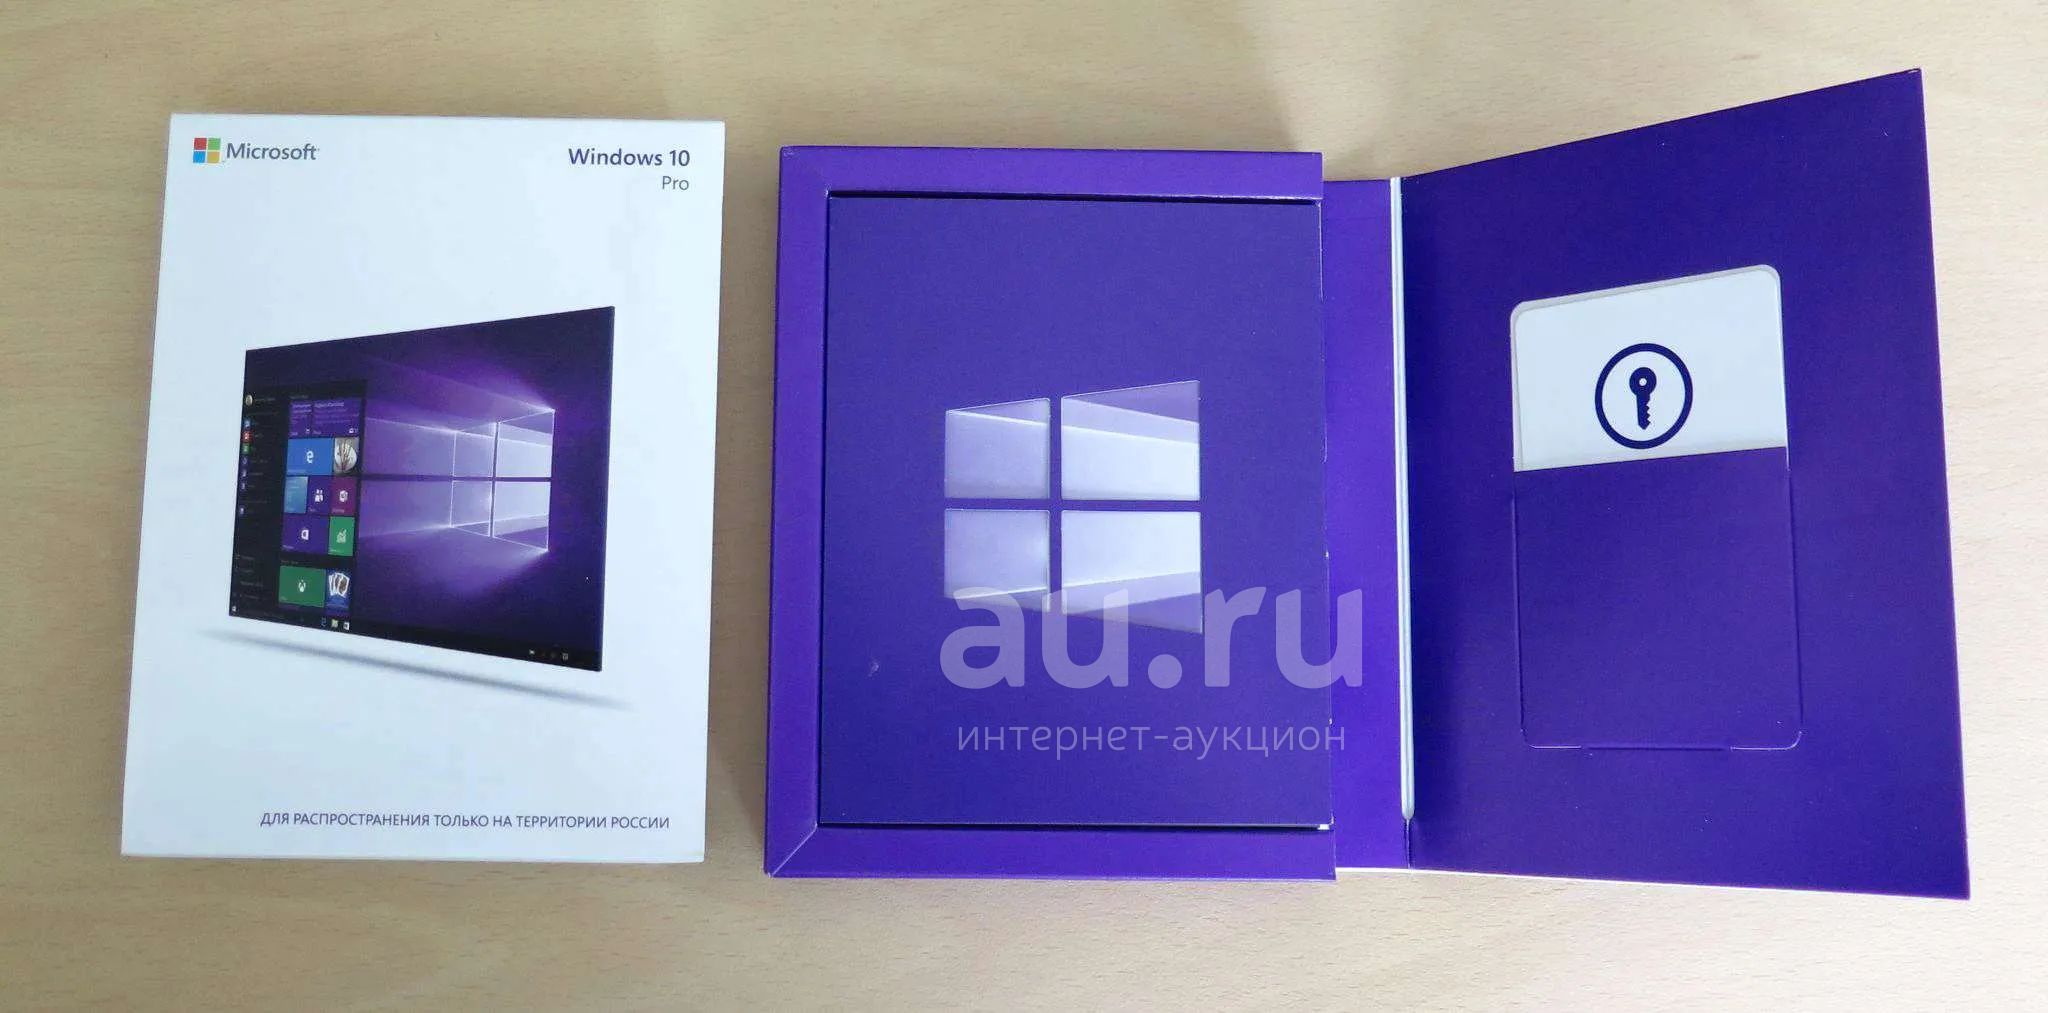 Dream r10 pro. Windows 10 Pro Box. Виндовс 10 коробка. Виндовс 10 про коробочная версия. Microsoft Windows 10 Box.